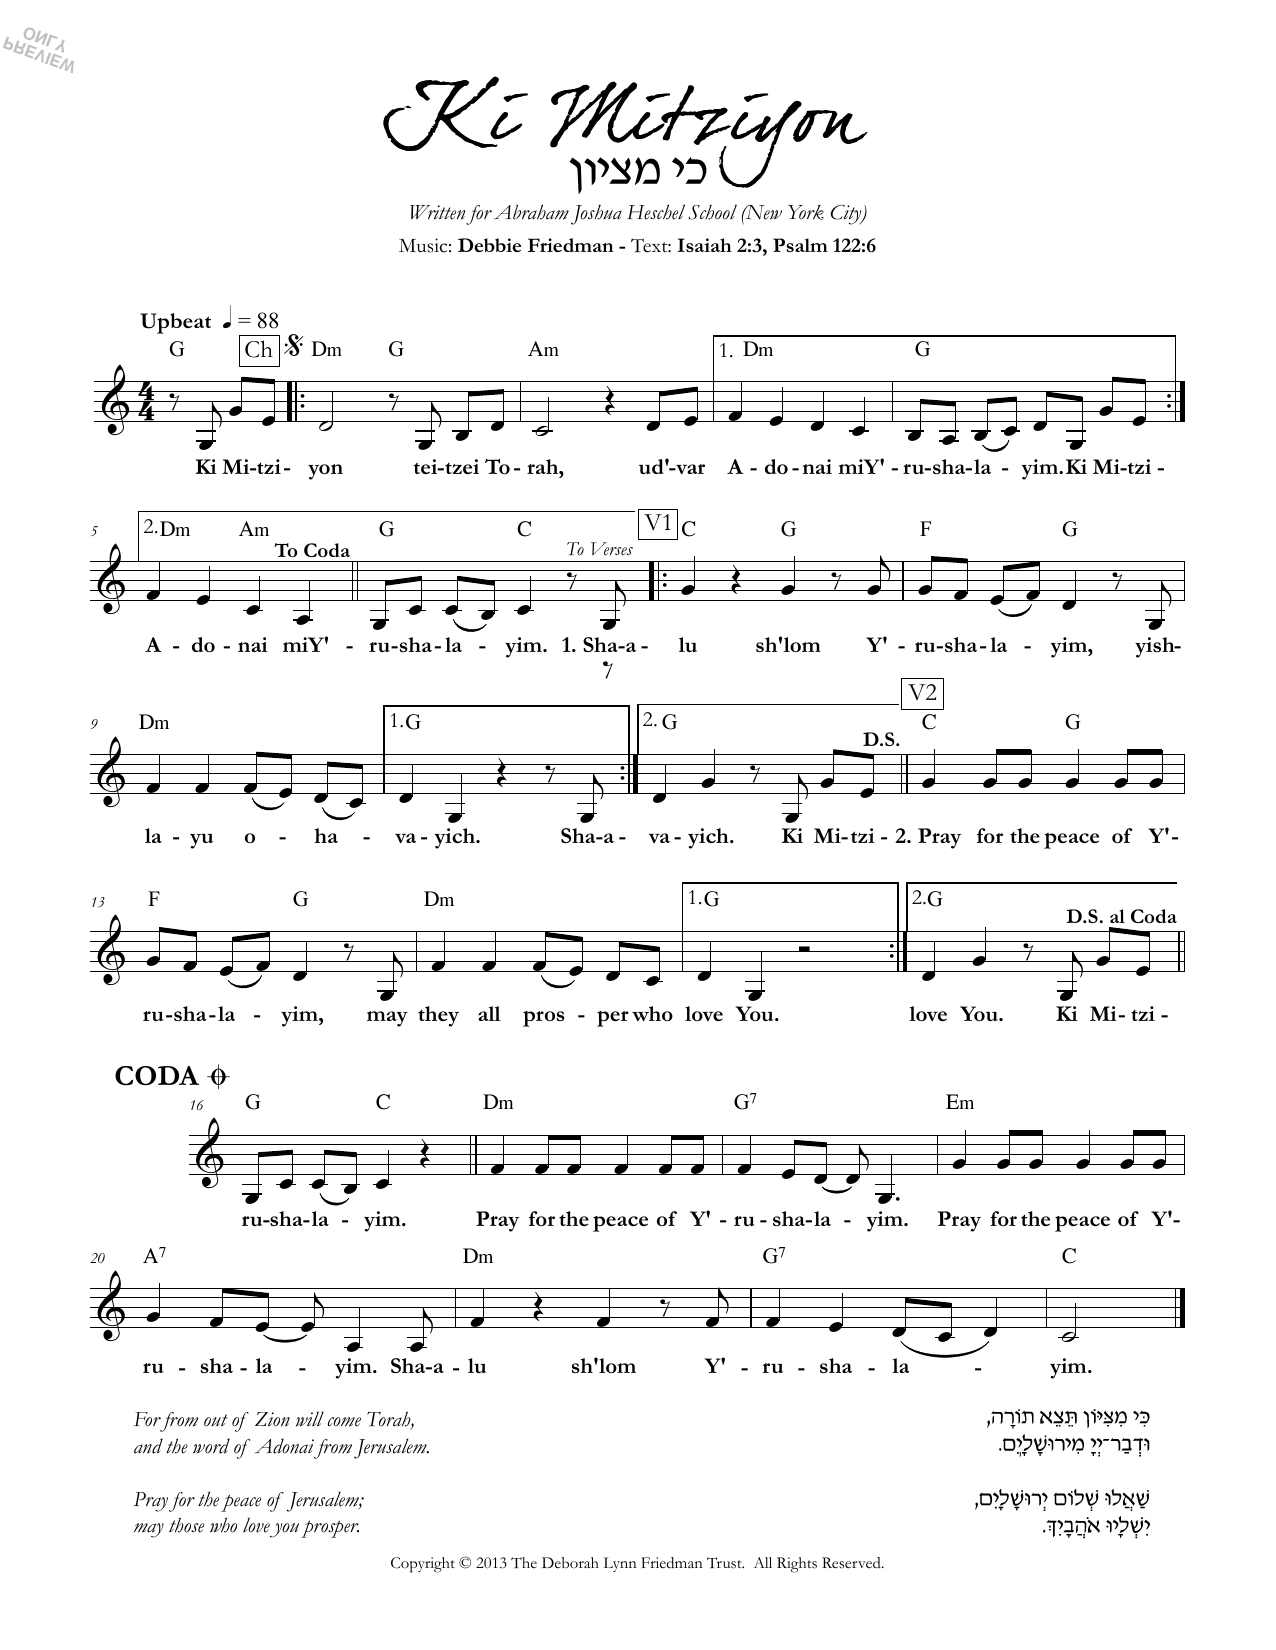 Download Debbie Friedman Ki Mitziyon Sheet Music and learn how to play Lead Sheet / Fake Book PDF digital score in minutes